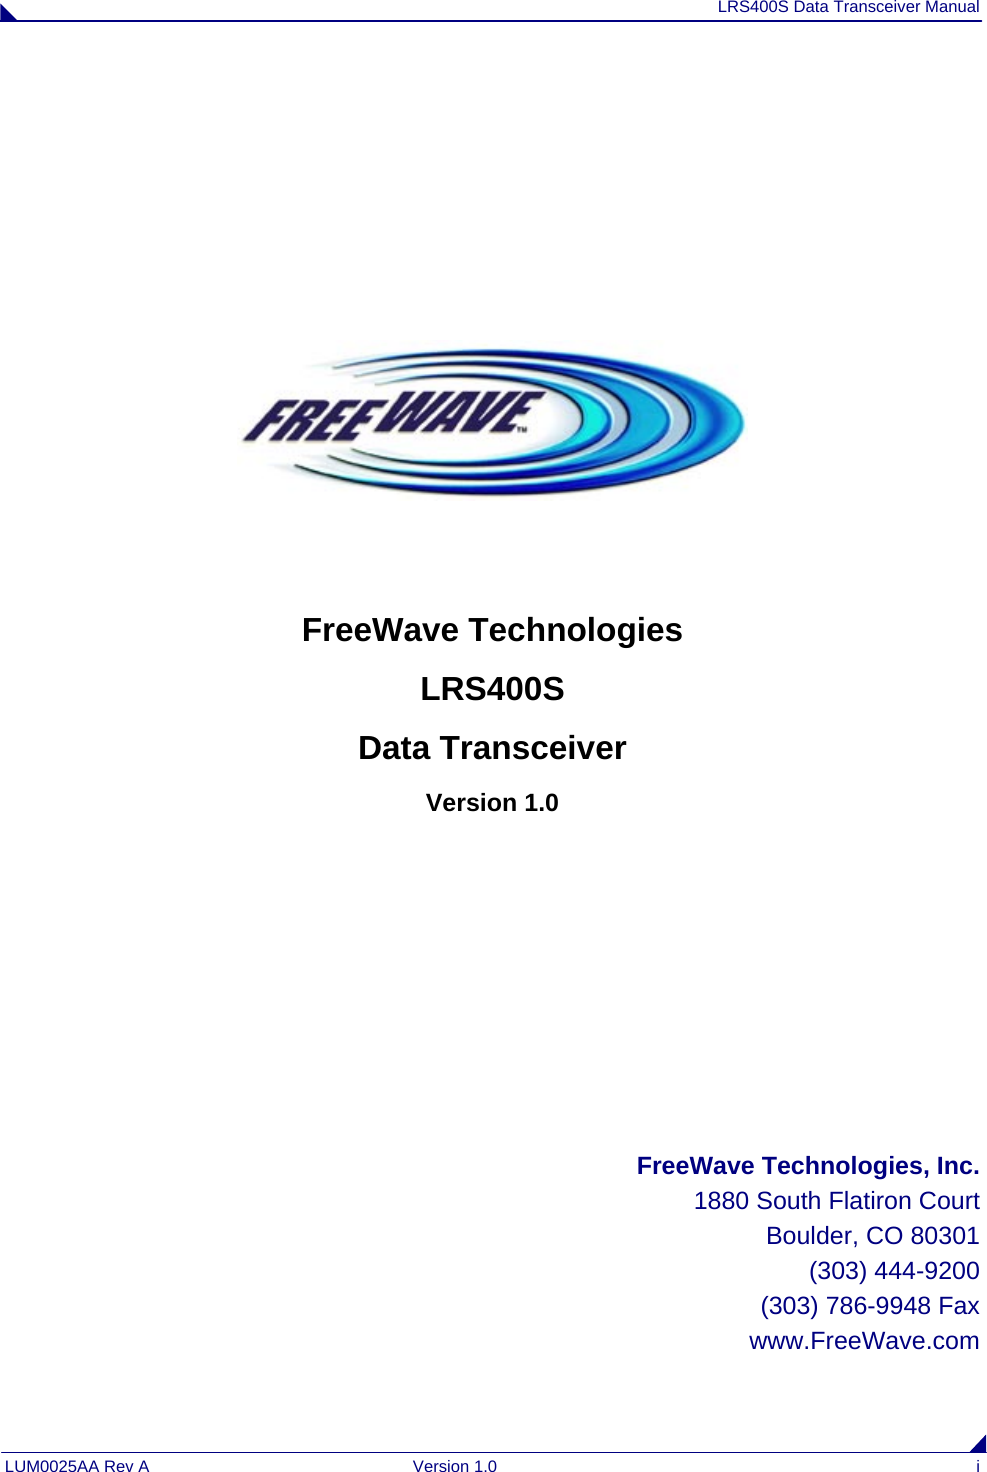 LRS400S Data Transceiver Manual LUM0025AA Rev A  Version 1.0  i          FreeWave Technologies LRS400S Data Transceiver Version 1.0        FreeWave Technologies, Inc. 1880 South Flatiron Court Boulder, CO 80301 (303) 444-9200 (303) 786-9948 Fax www.FreeWave.com 